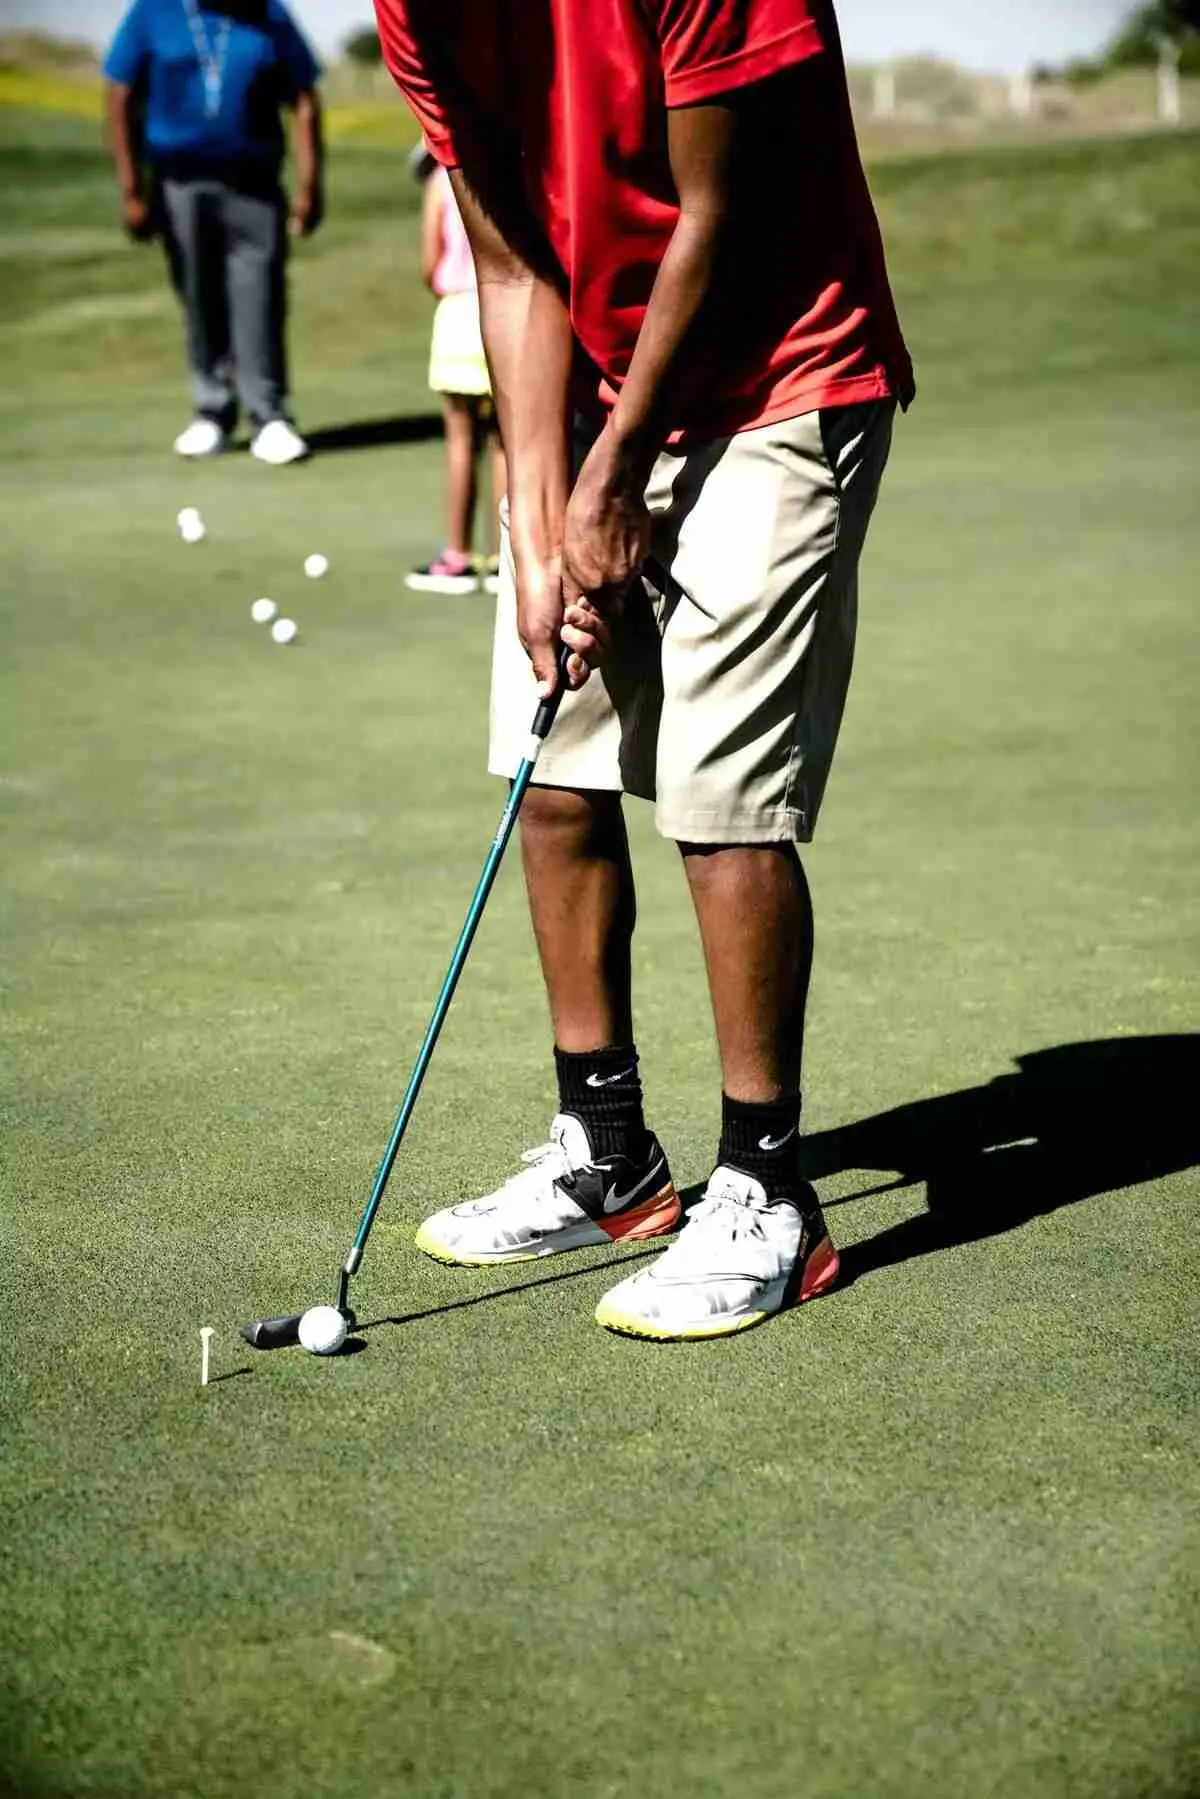 player using a putter golf club